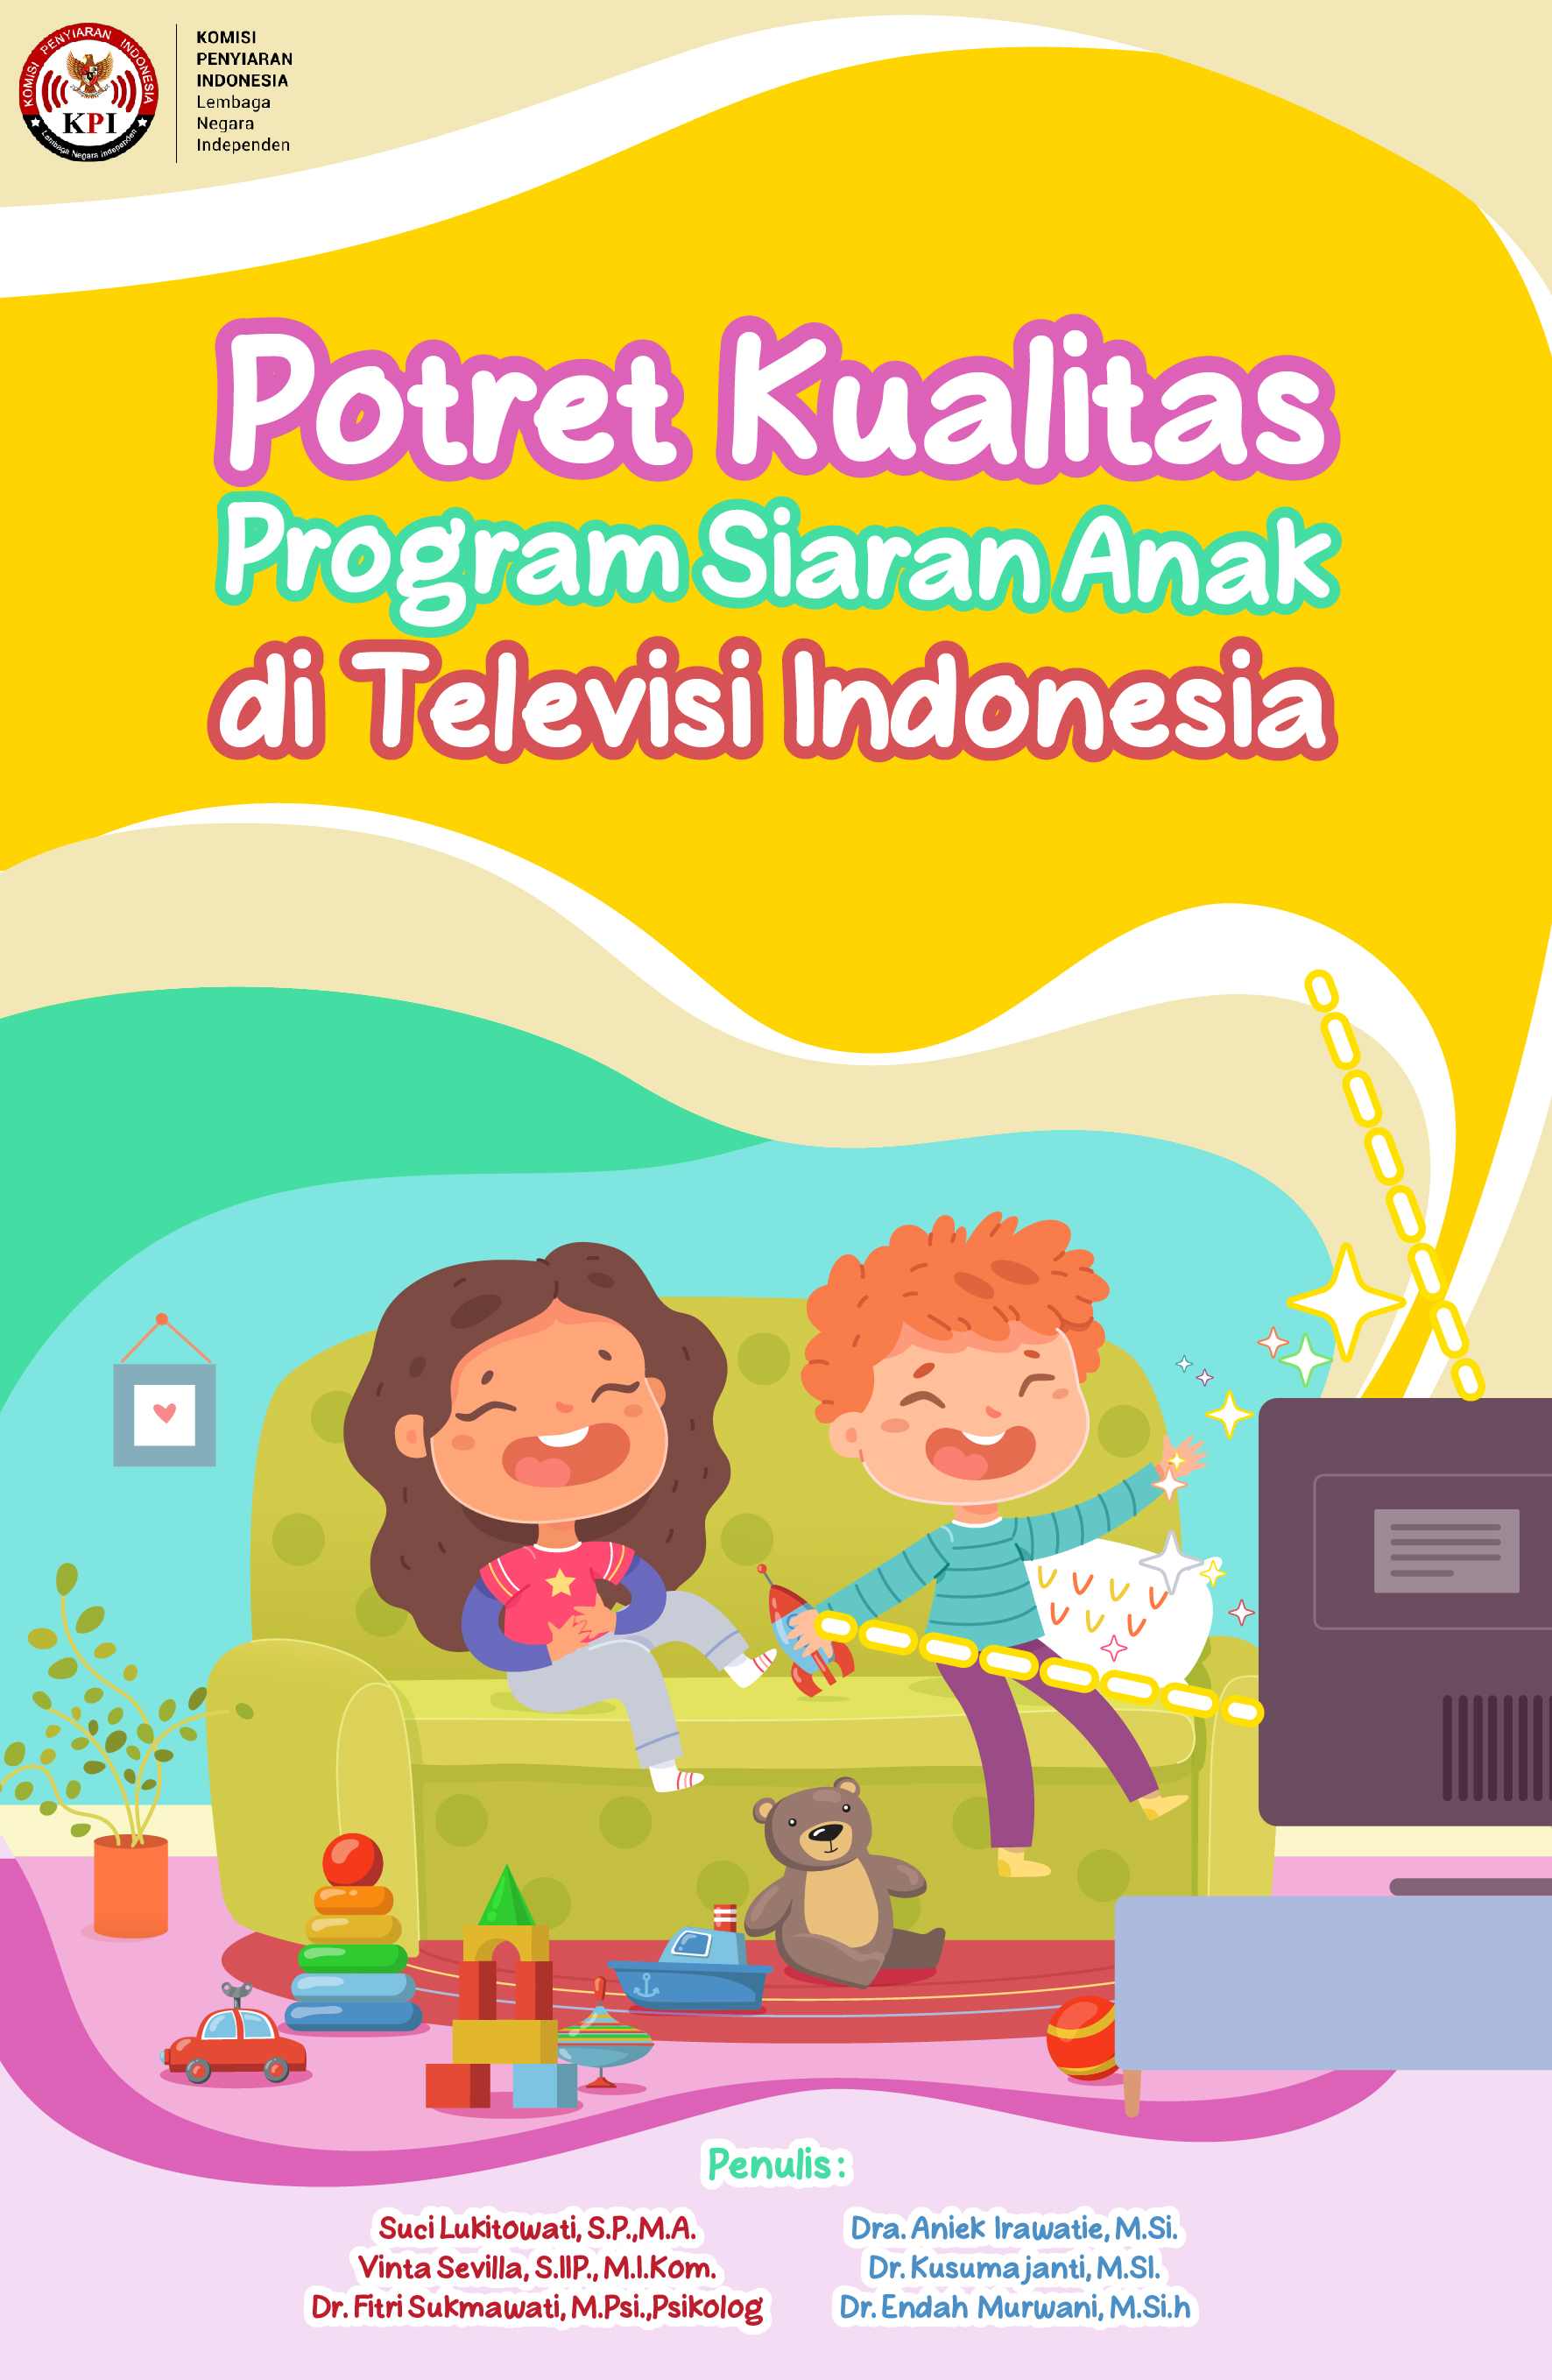 Potret kualitas program siaran anak di televisi Indonesia